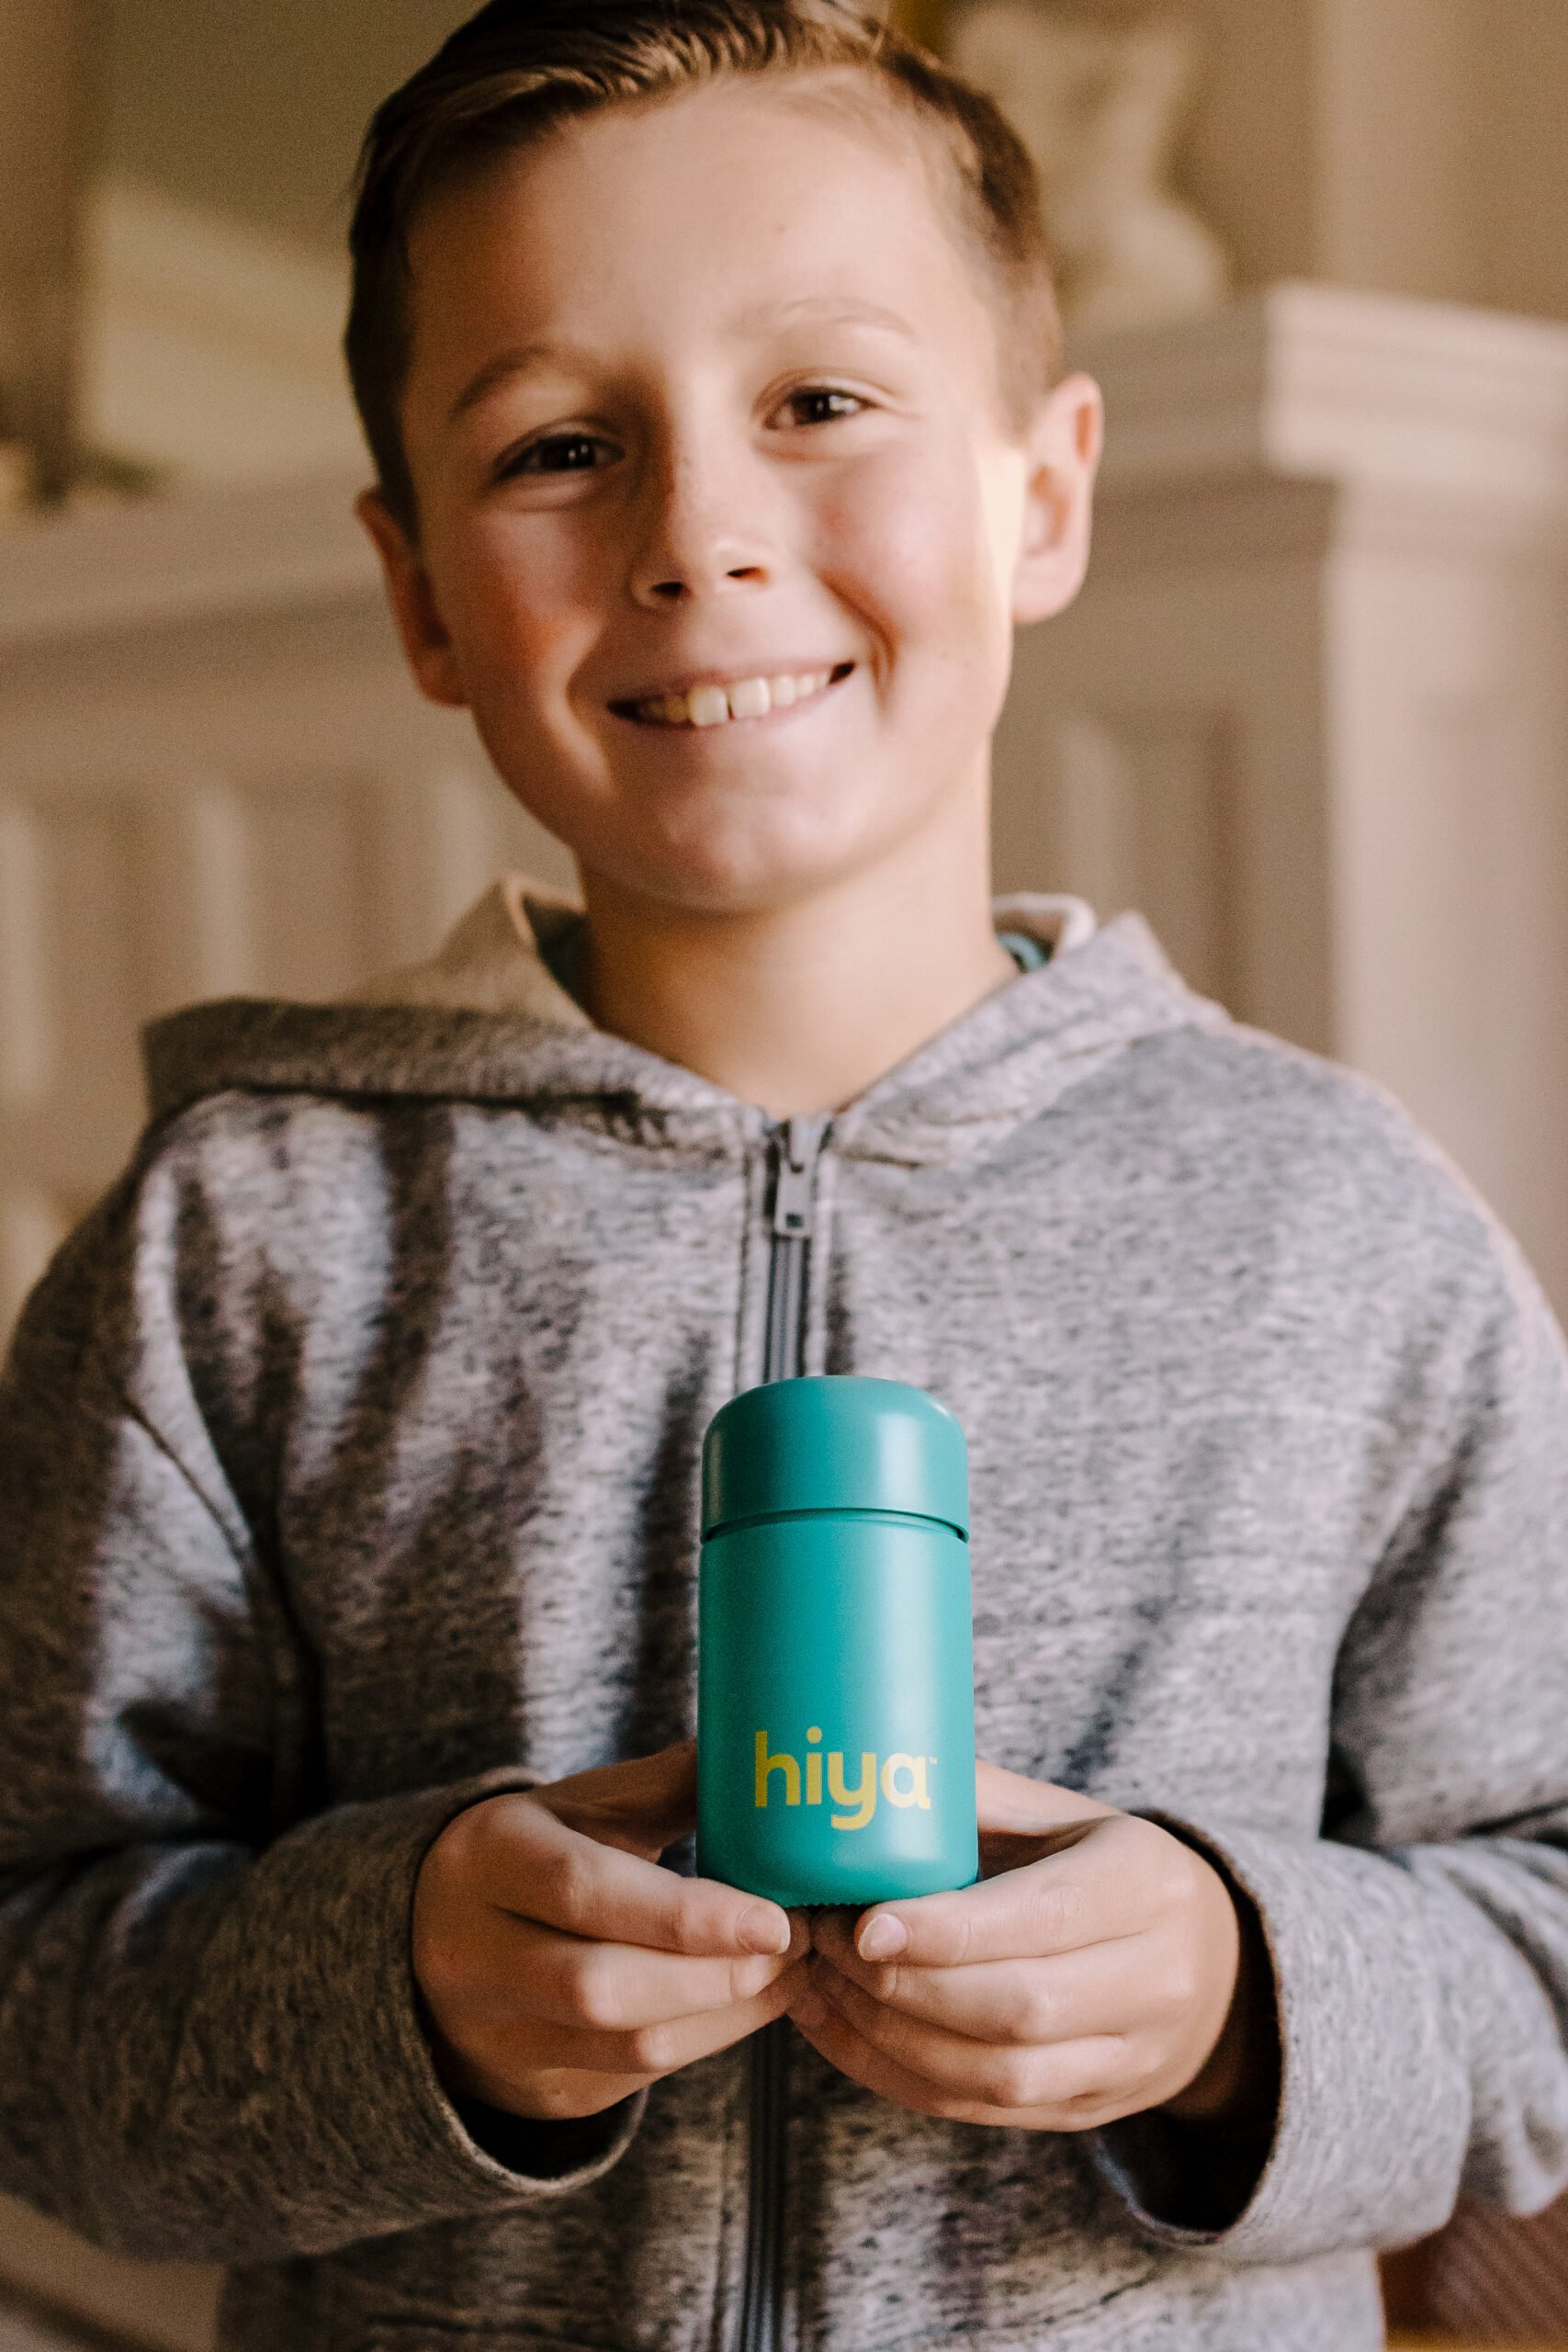 A smiling boy holding up Hiya probiotics in a teal bottle. 